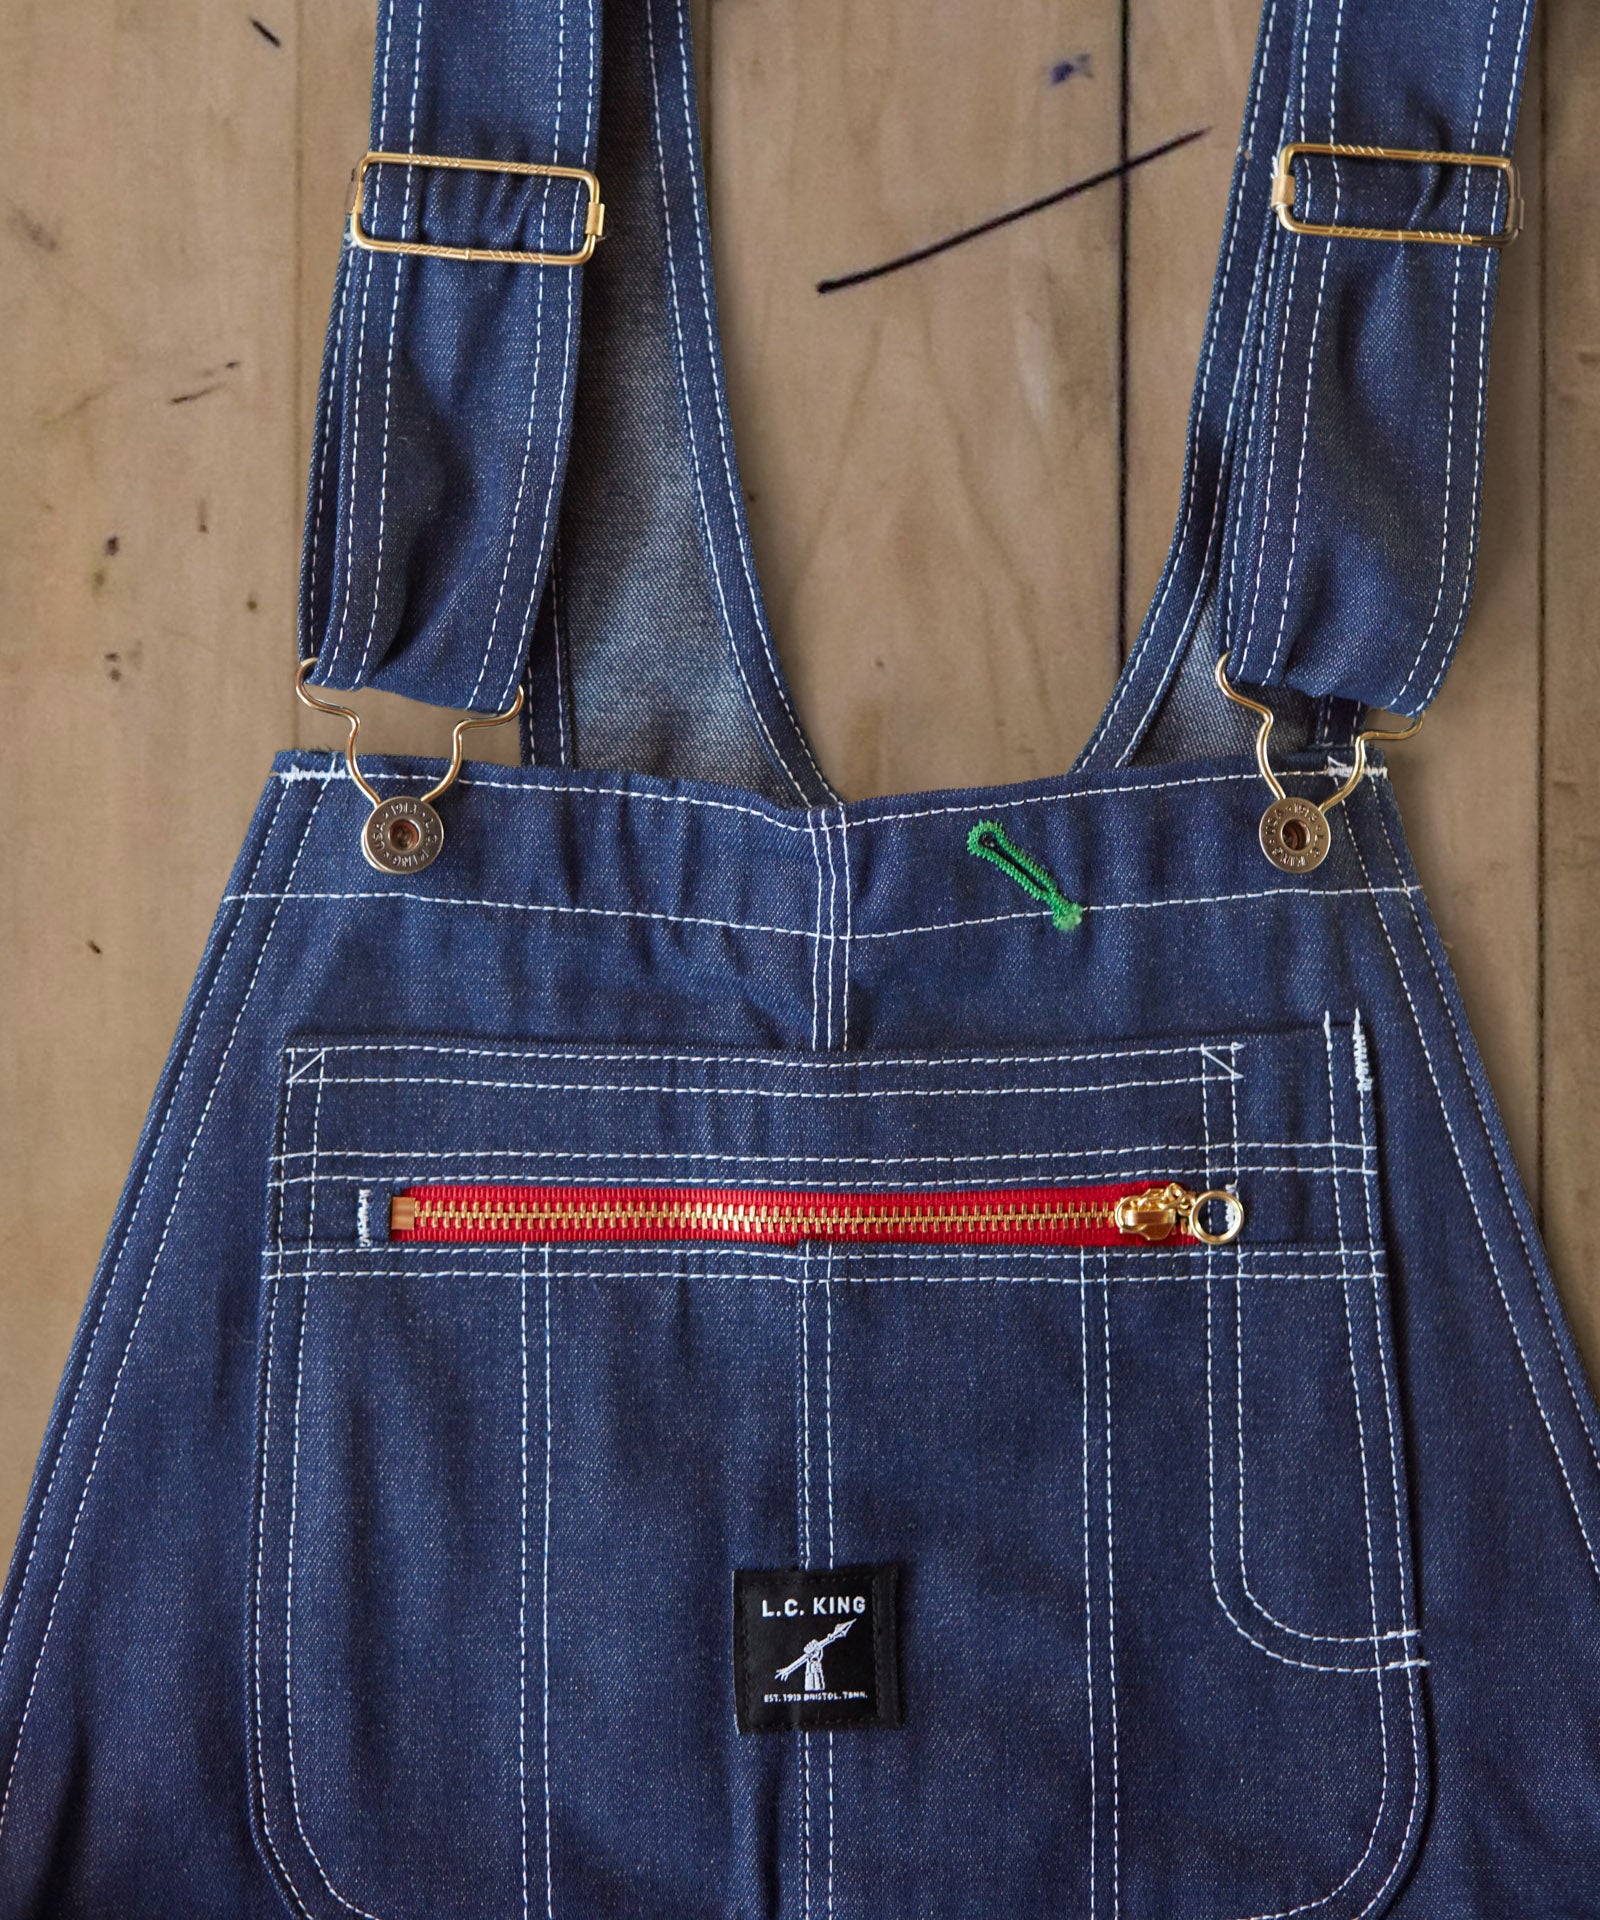 MEN'S POINTER BRAND Green Stitch Denim Overalls W38 x L29 Made USA